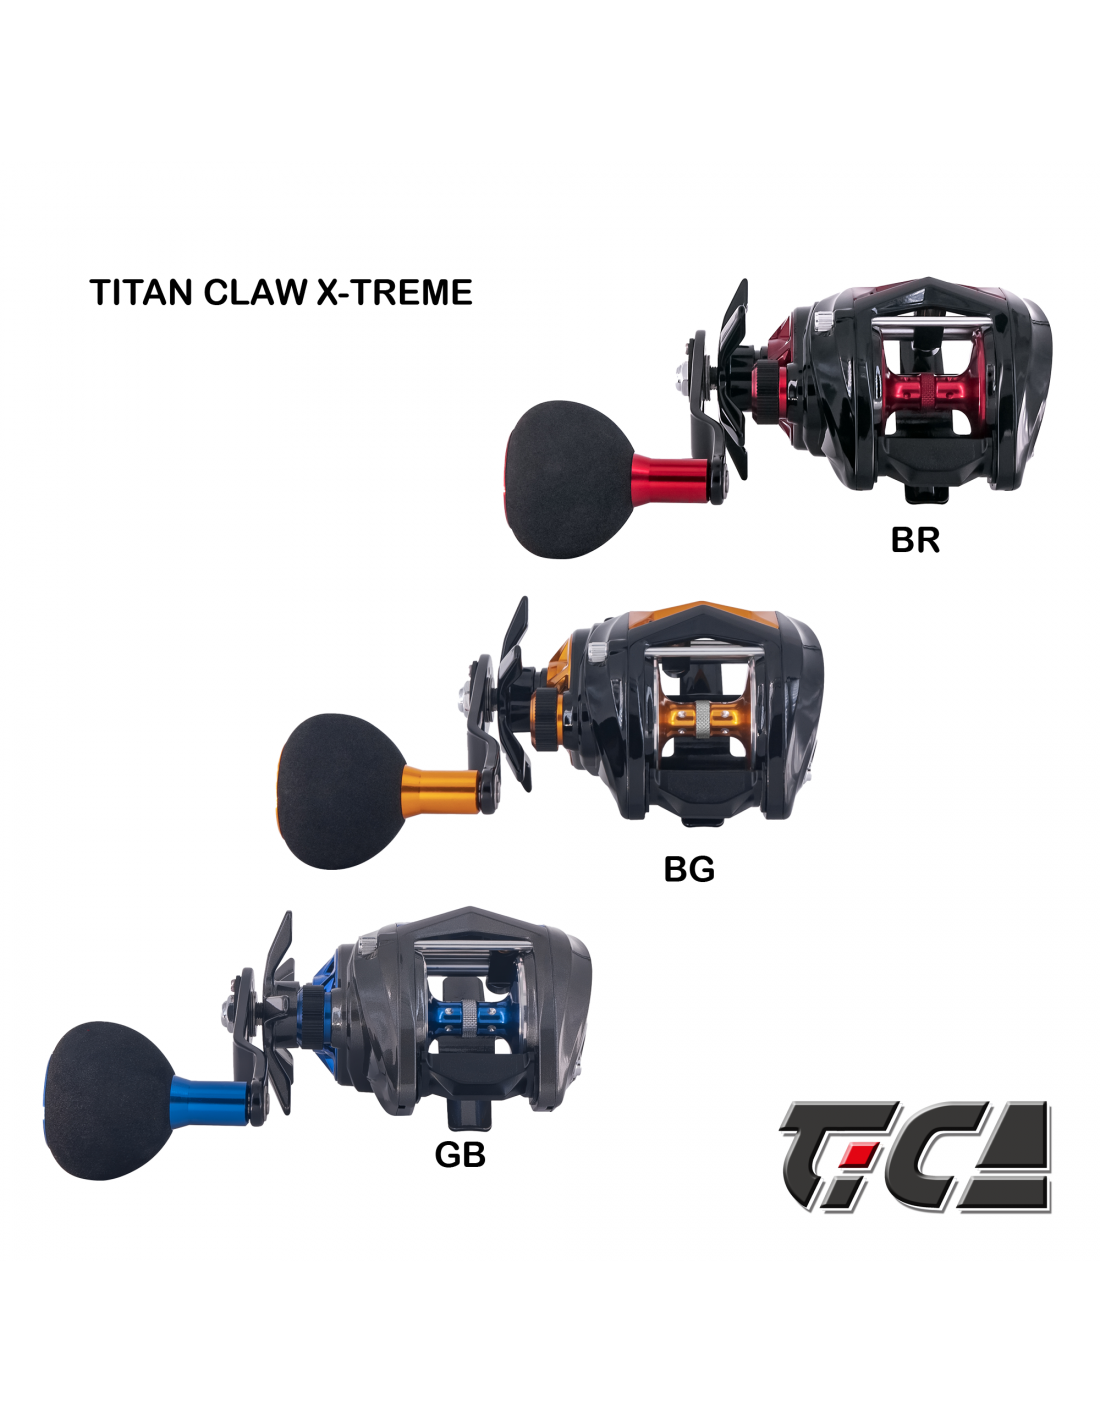 TICA TITAN CLAW EX 301 H